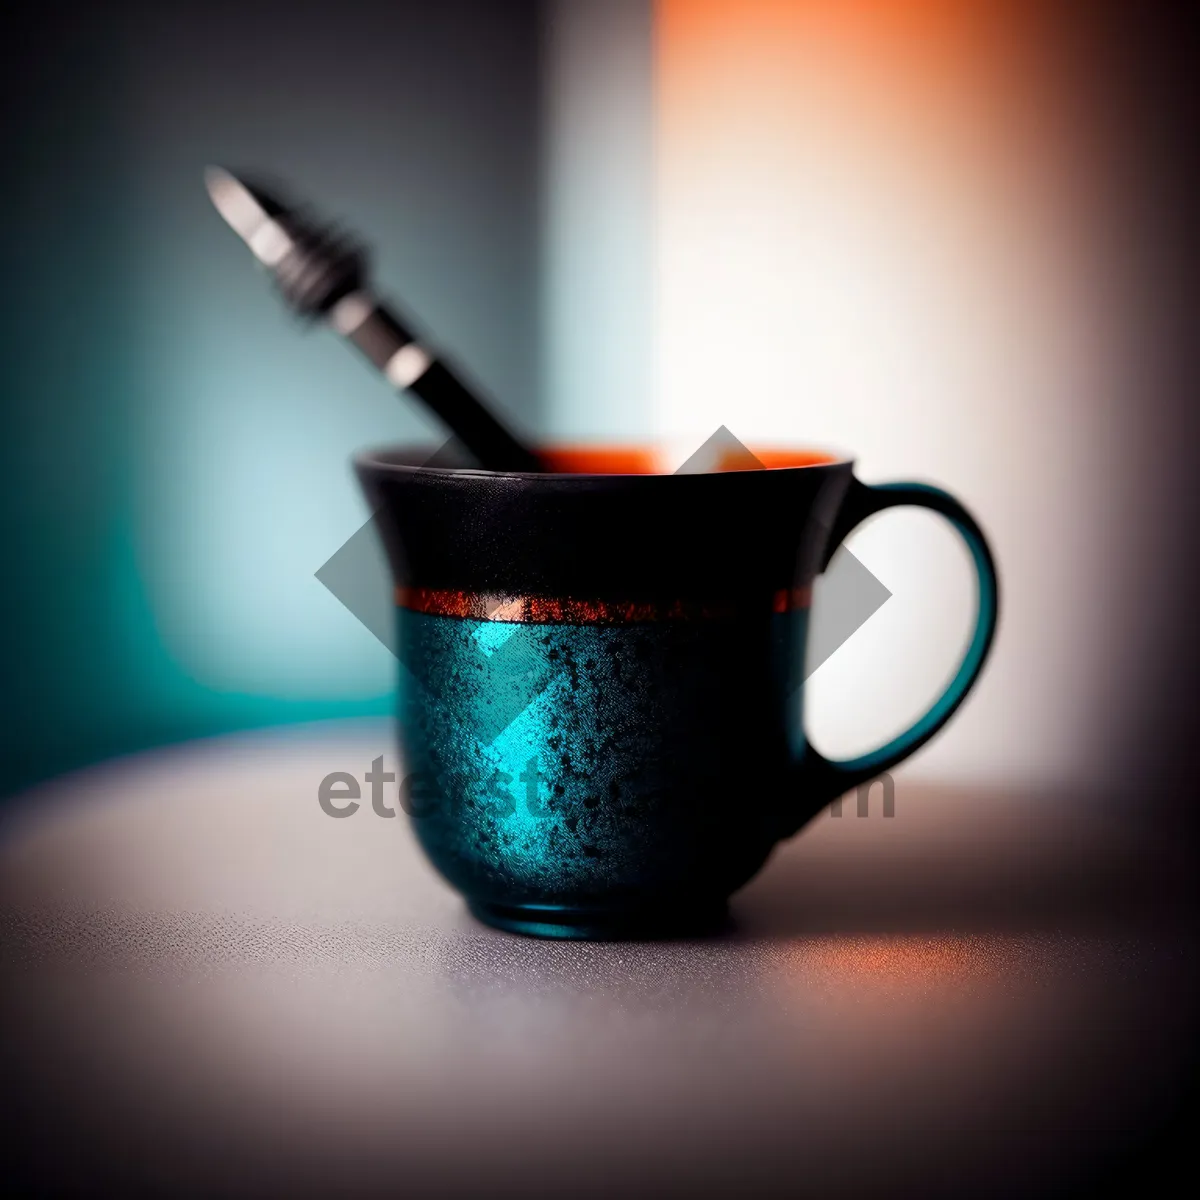 Picture of Morning Brew: Aromatic Espresso in Ceramic Cup